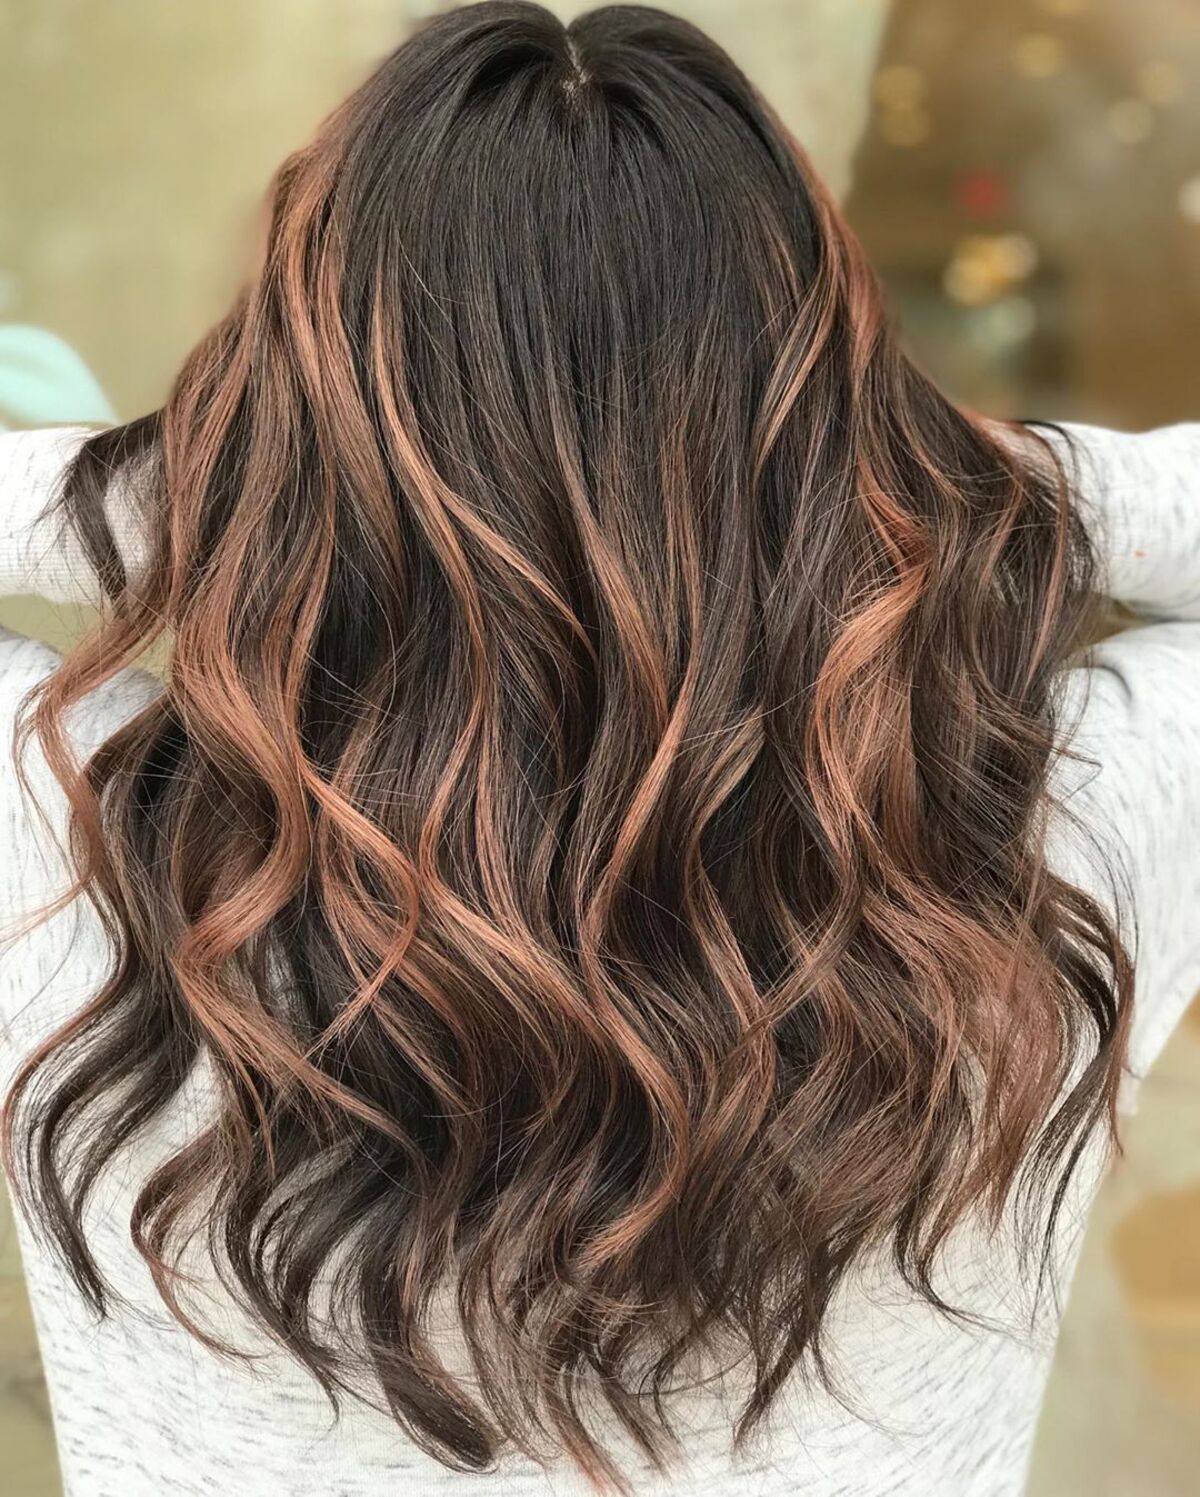 Rose Gold Highlights on Dark Hair